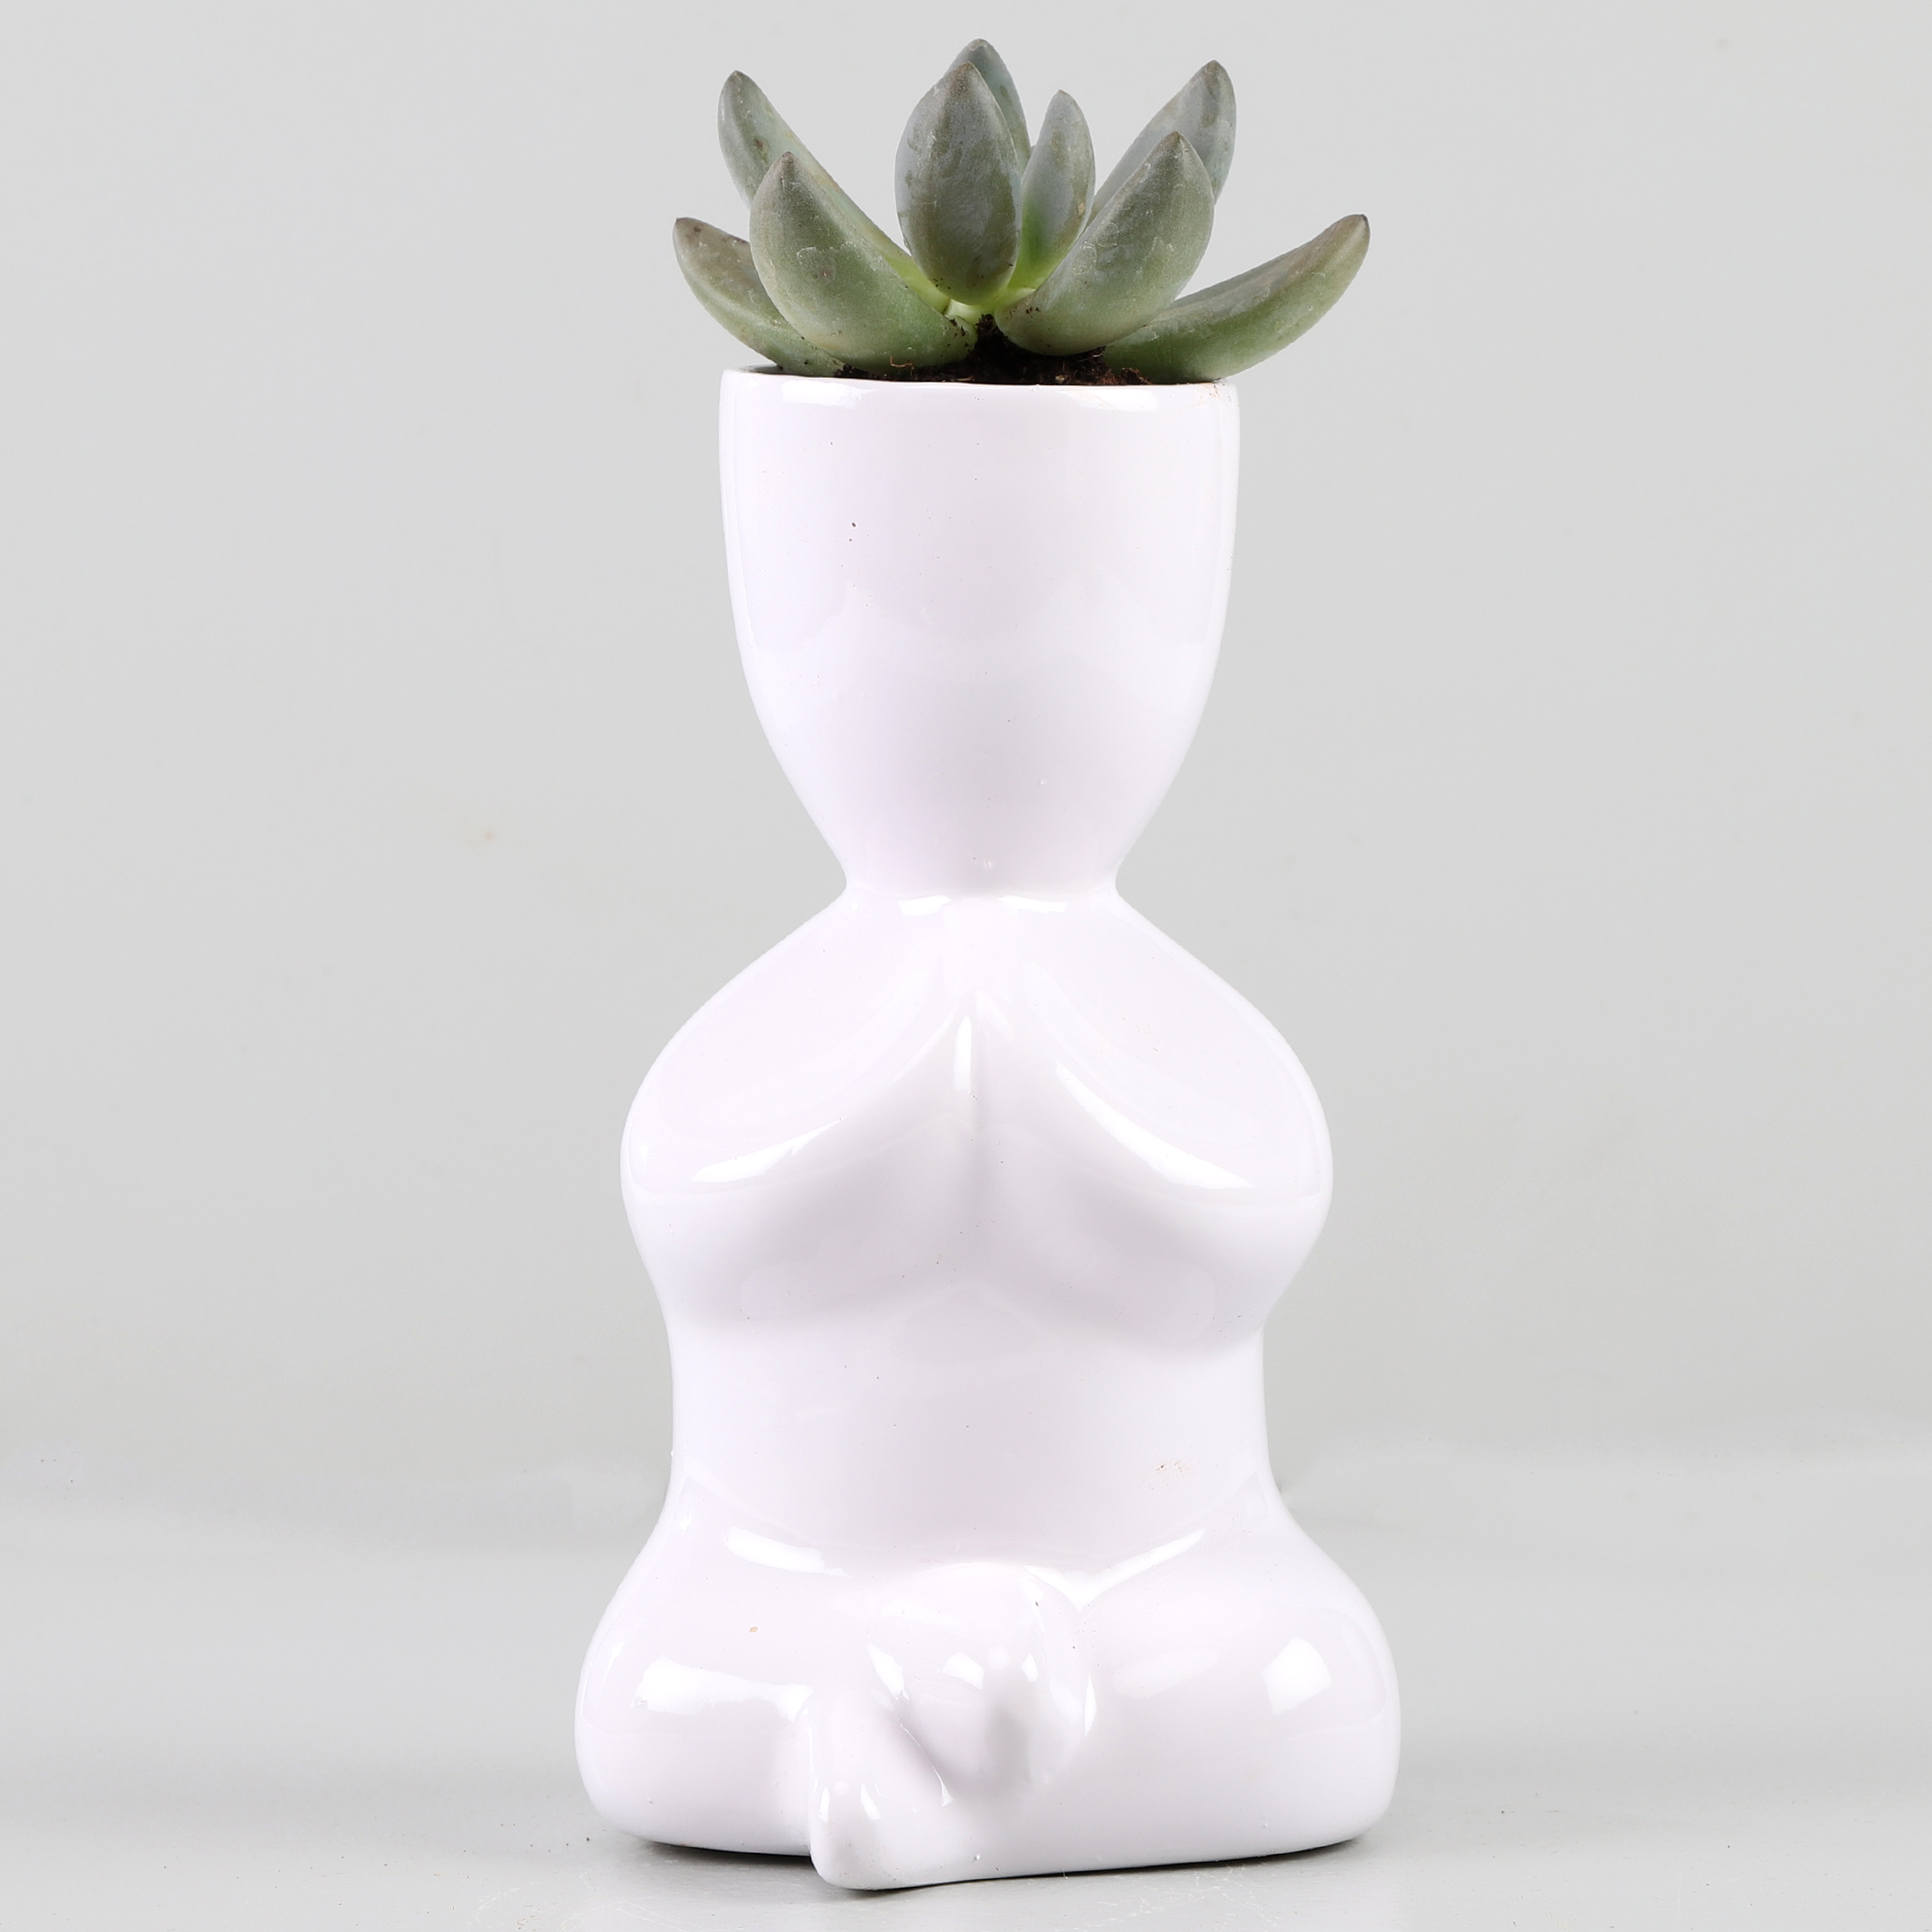 Haworthia Plant In White Figurine